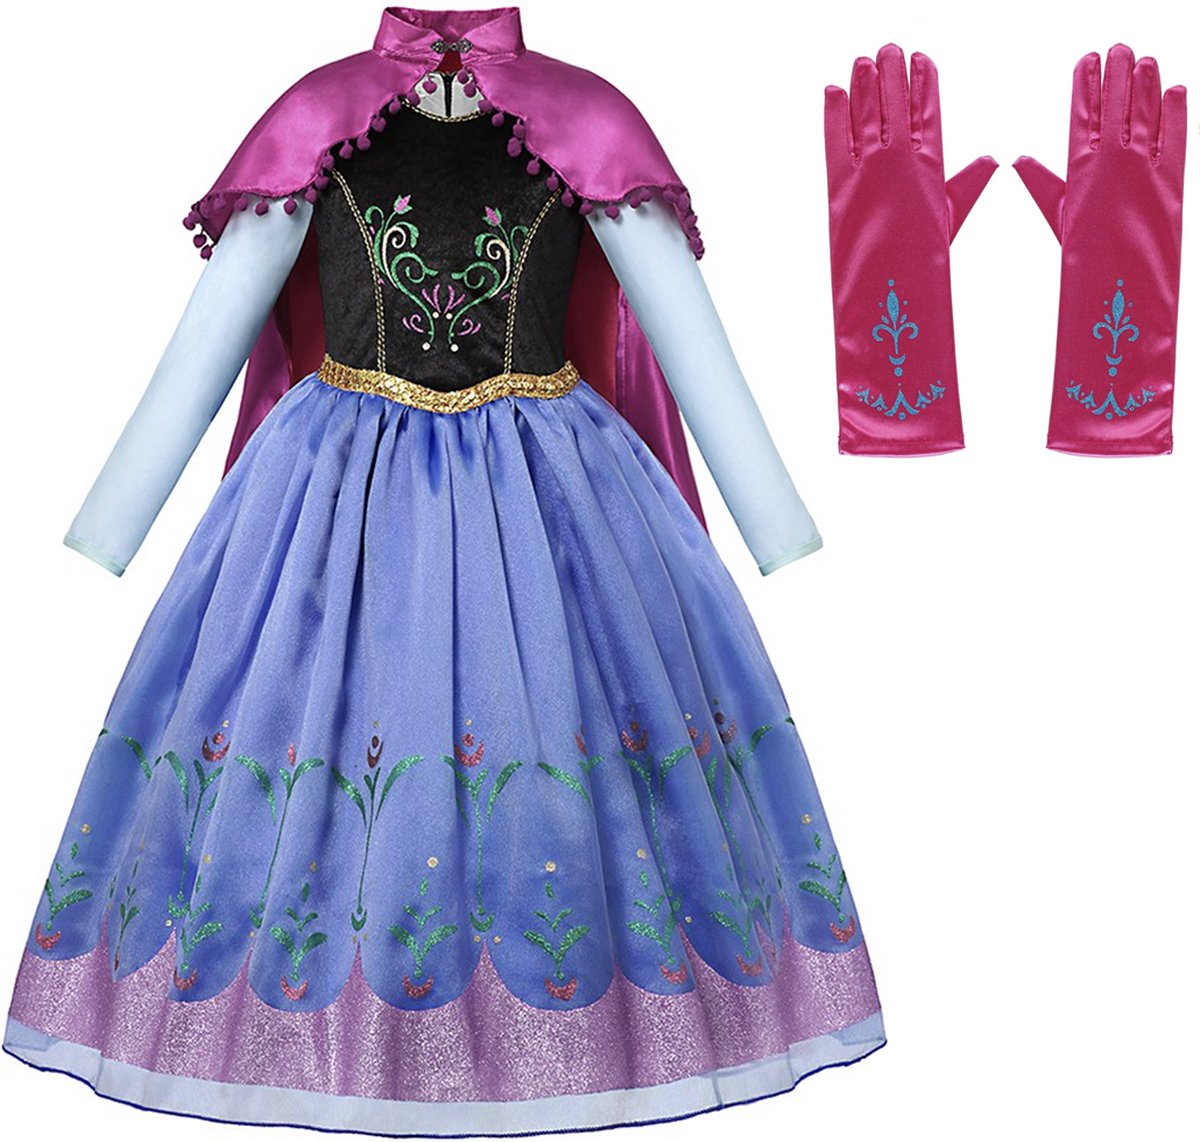 Prinsessenjurk meisje - Verkleedkleding meisje - Het Betere Merk - Lange roze cape - Maat 98/104 (110) - Carnavalskleding - Cadeau meisje - Verkleedkleren - Kleed